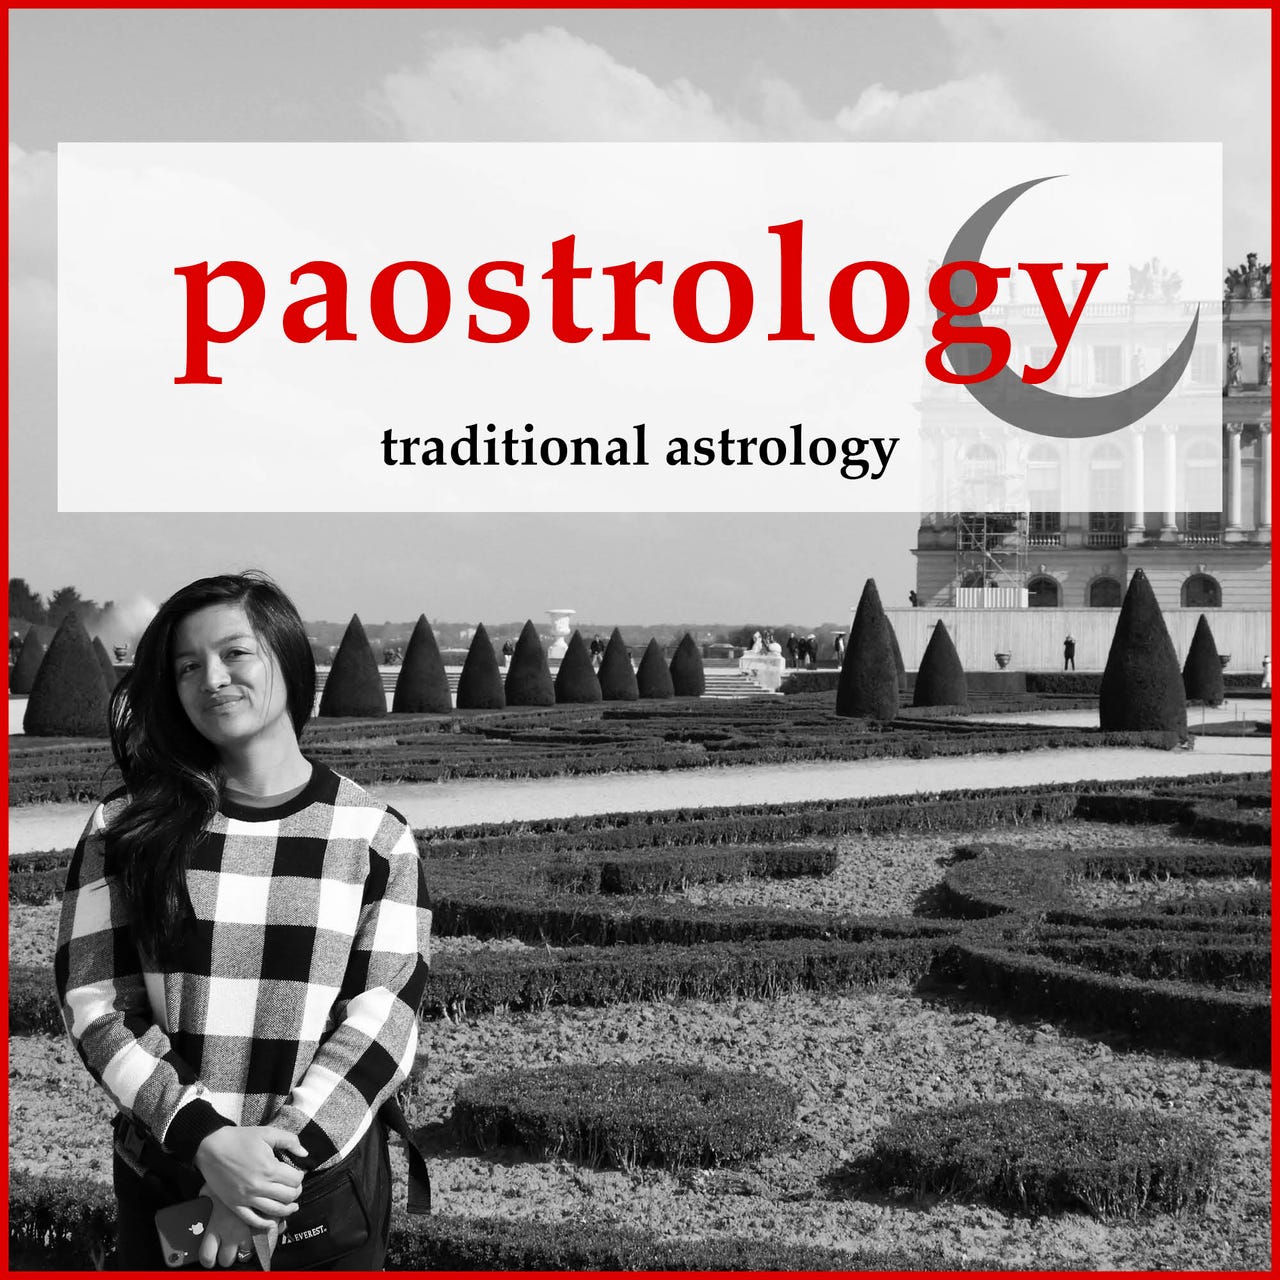 Paostrology: Astrology, Politics, & Hot Girl Things